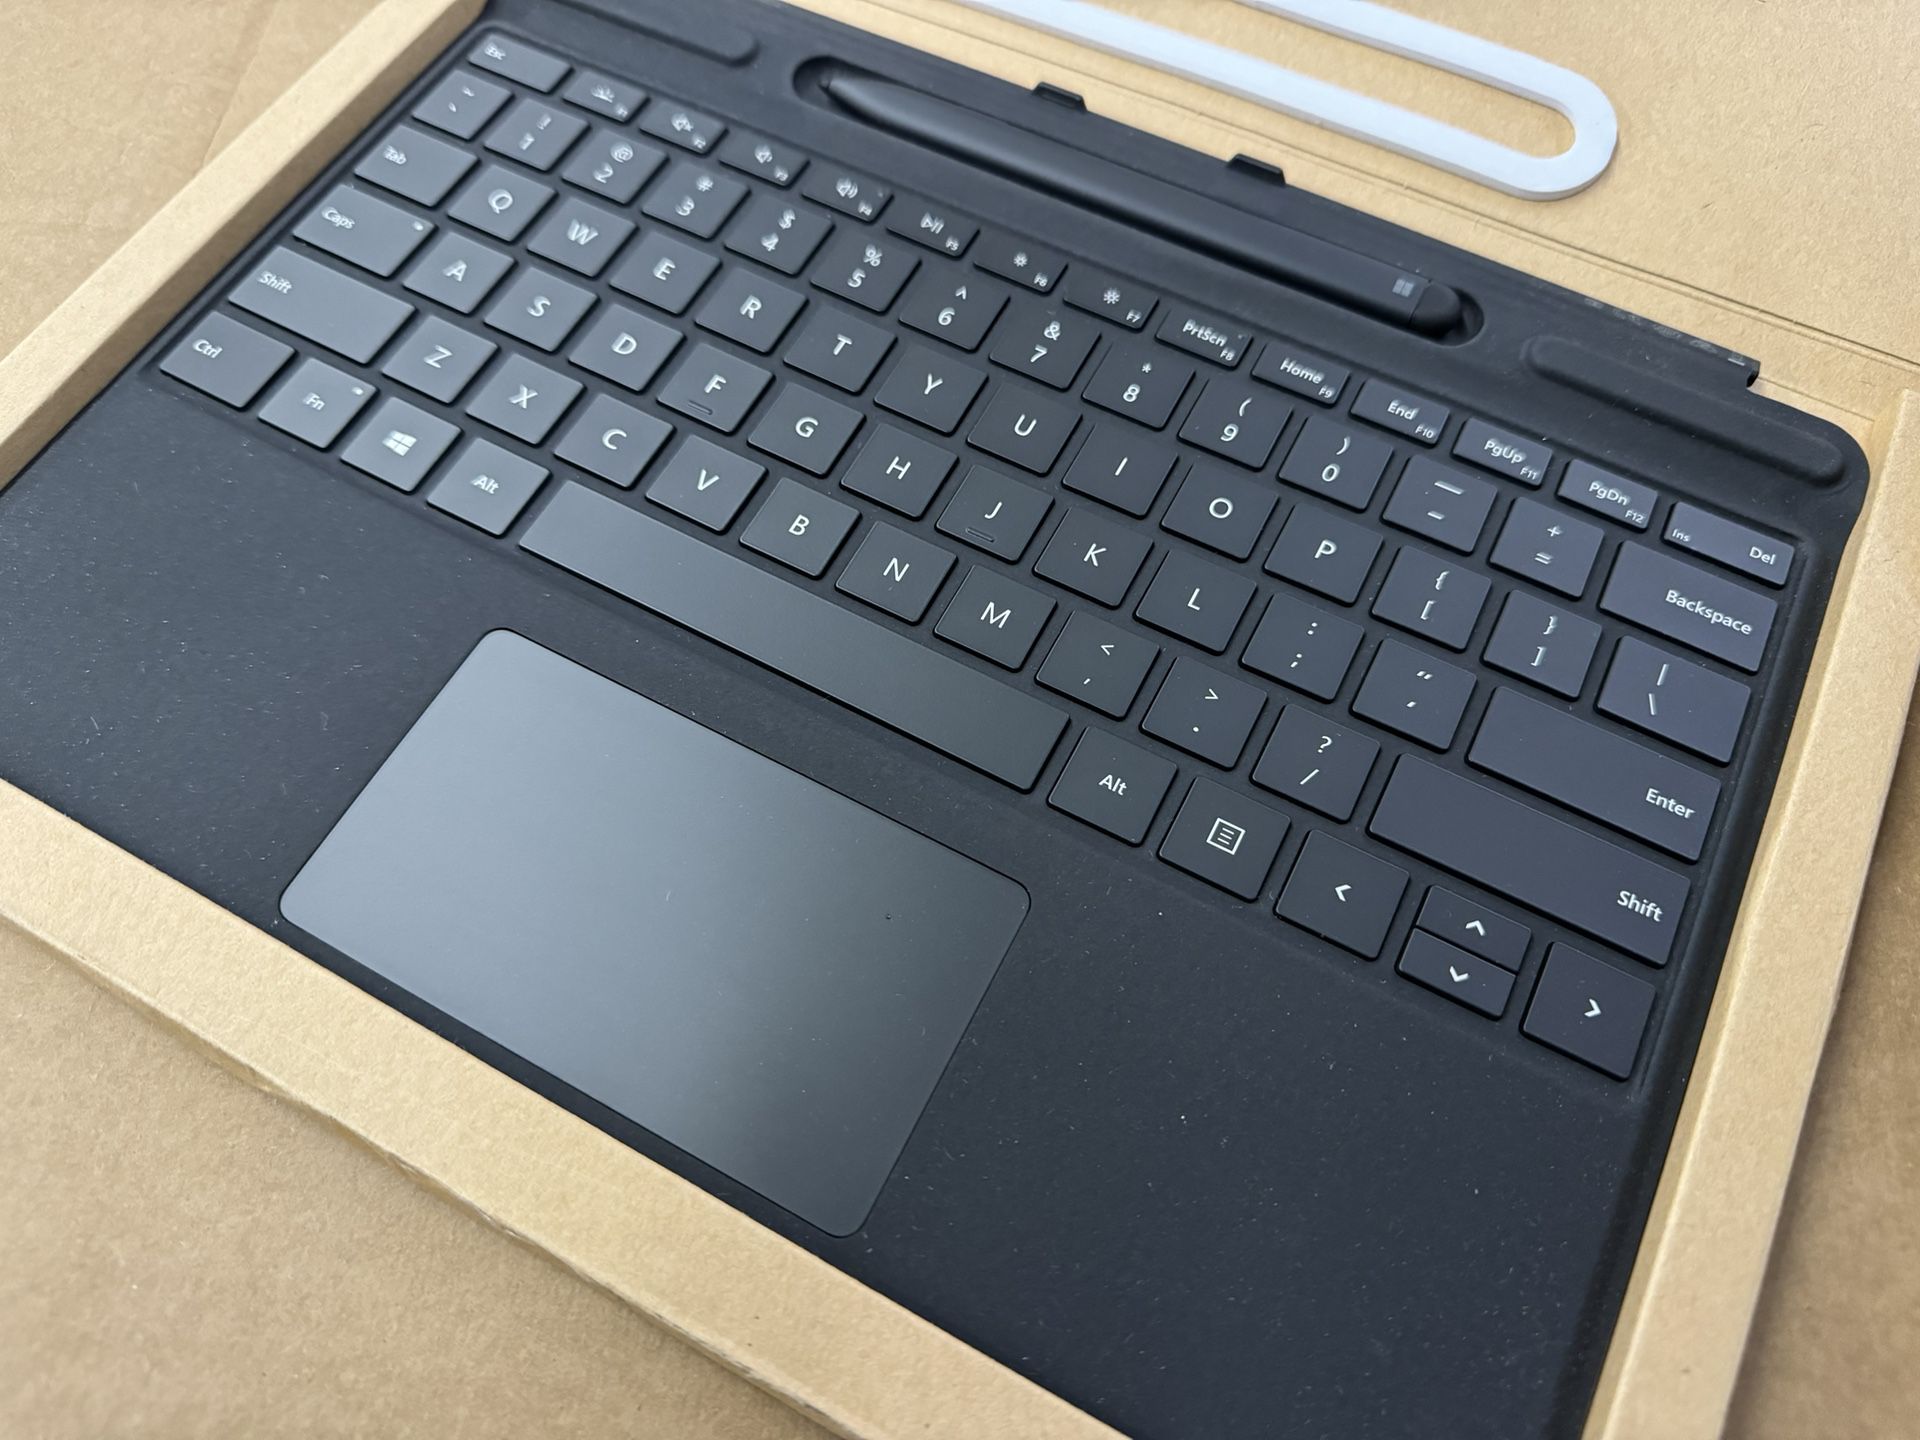 Microsoft Surface Pro X Signature Keyboard with Slim Pen